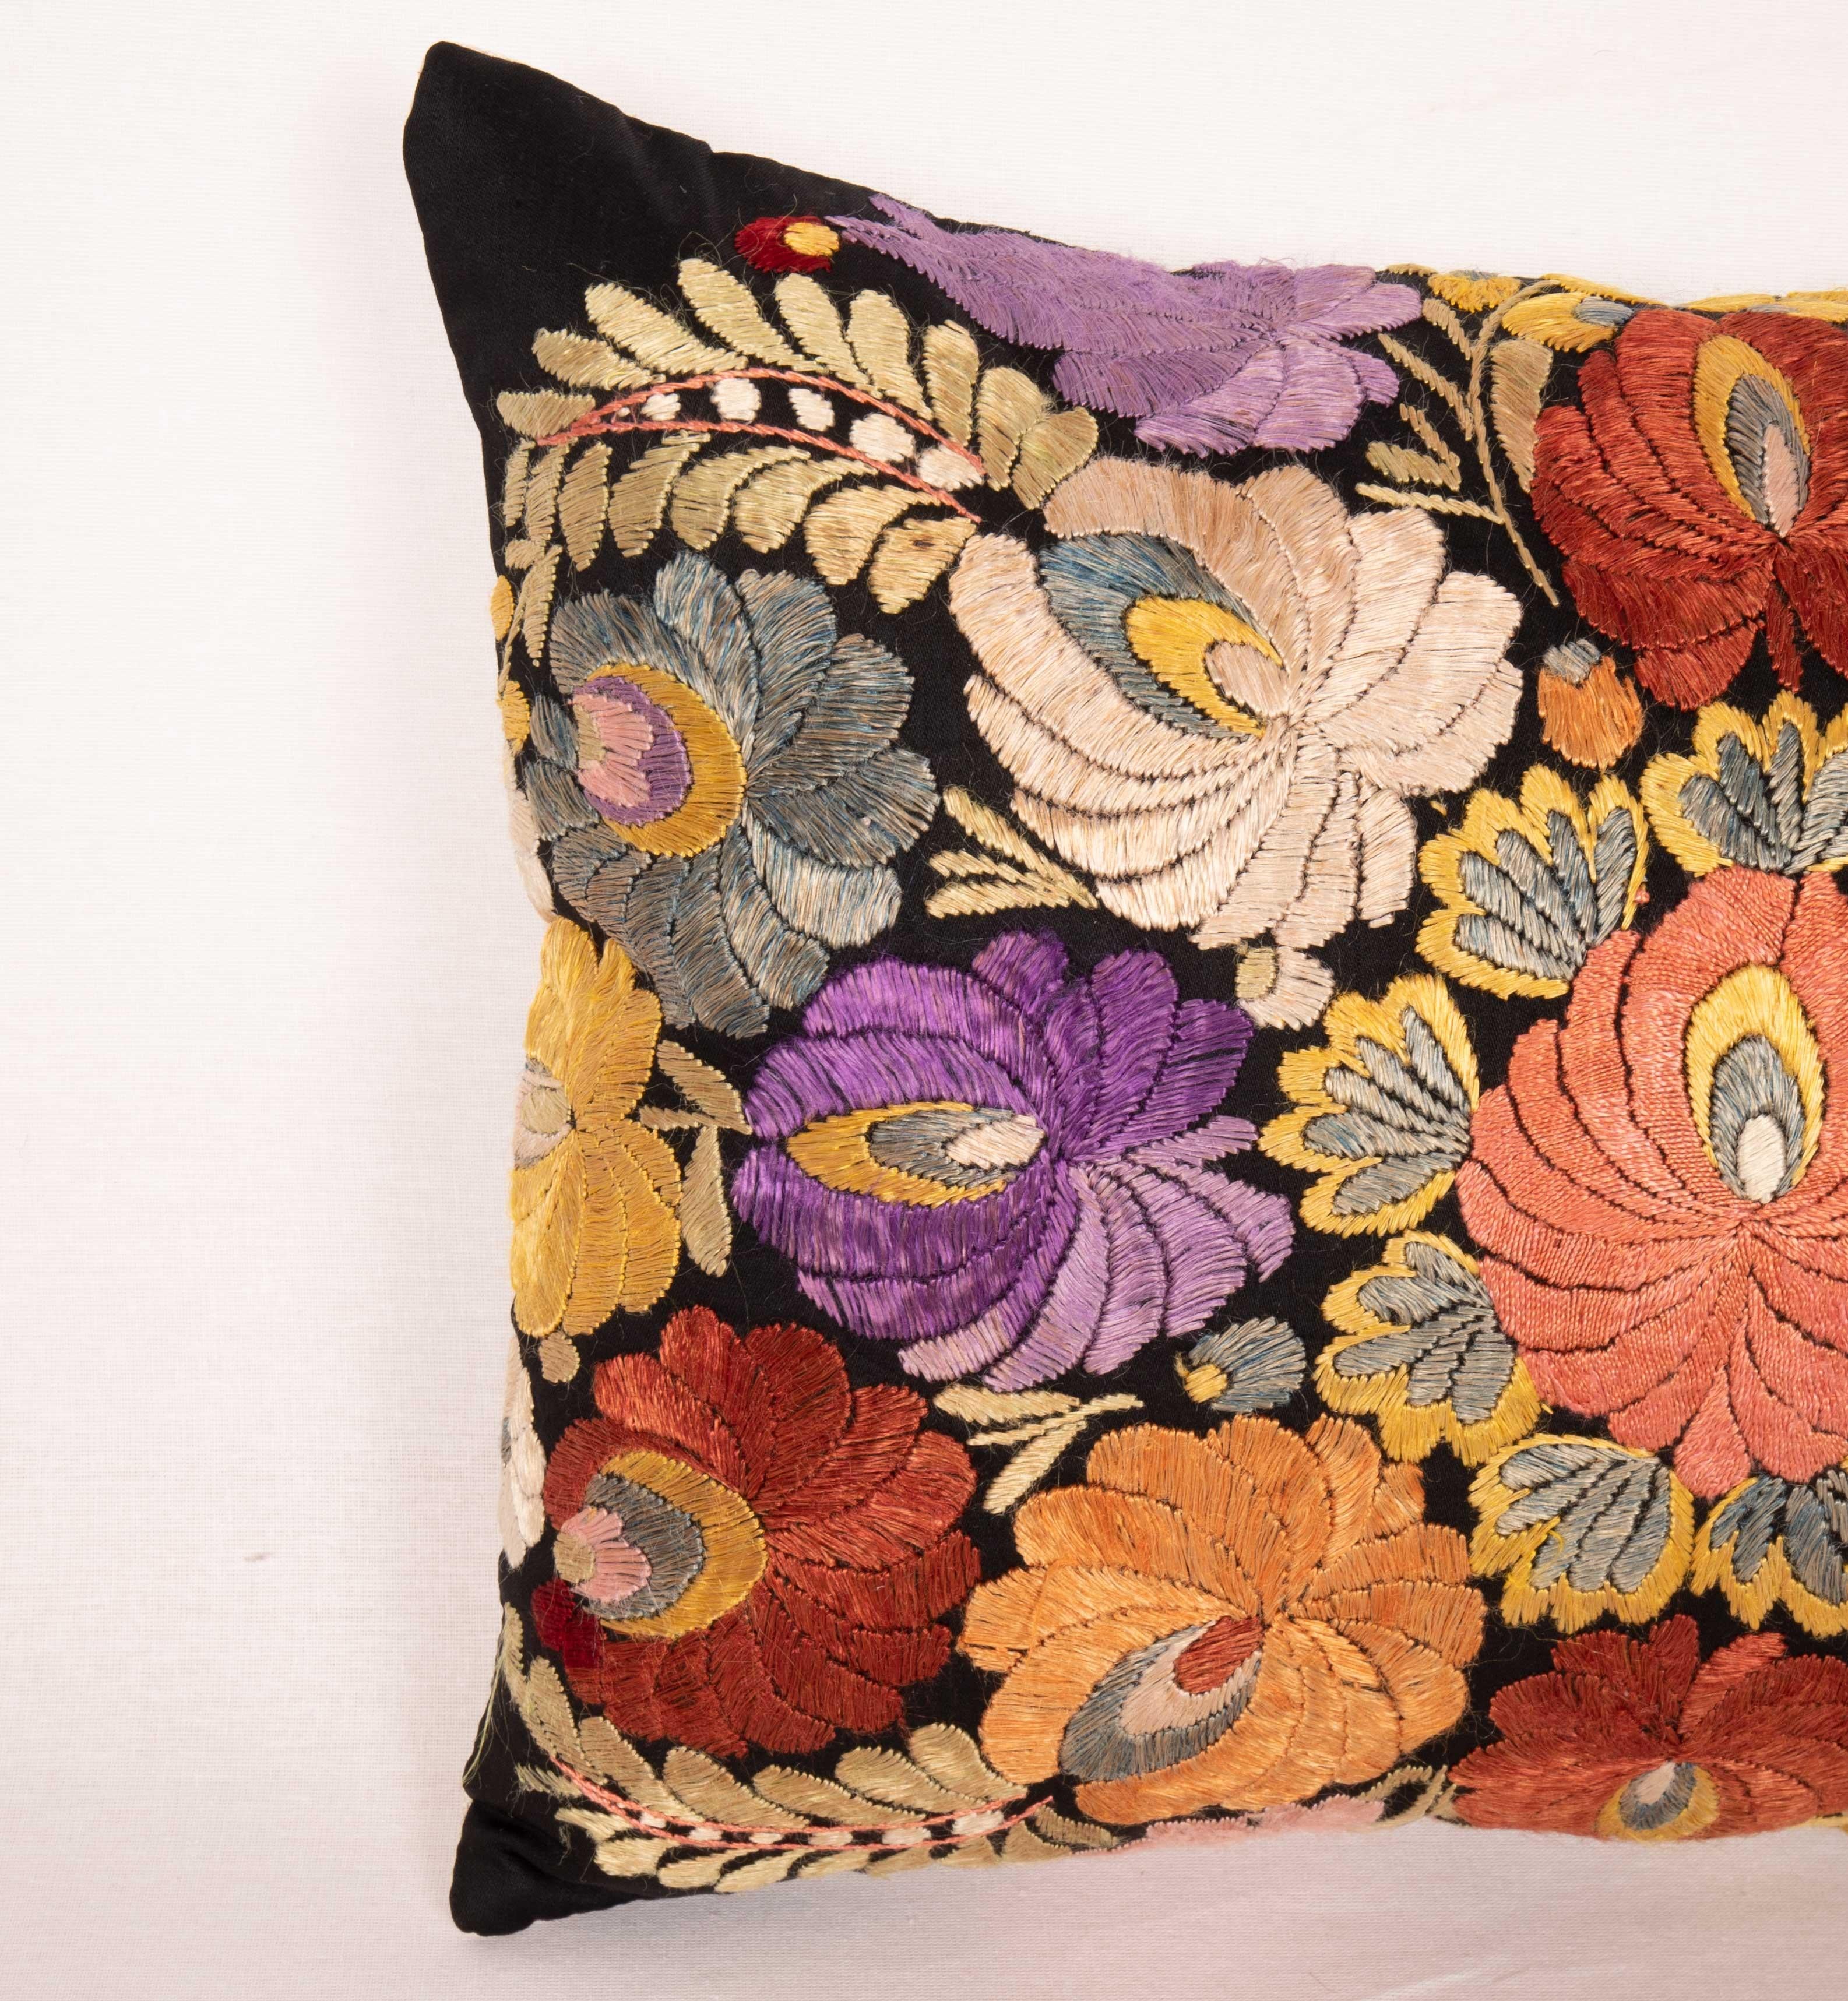 Embroidered Hungarian Matyo Pillowcase, Early 20th C